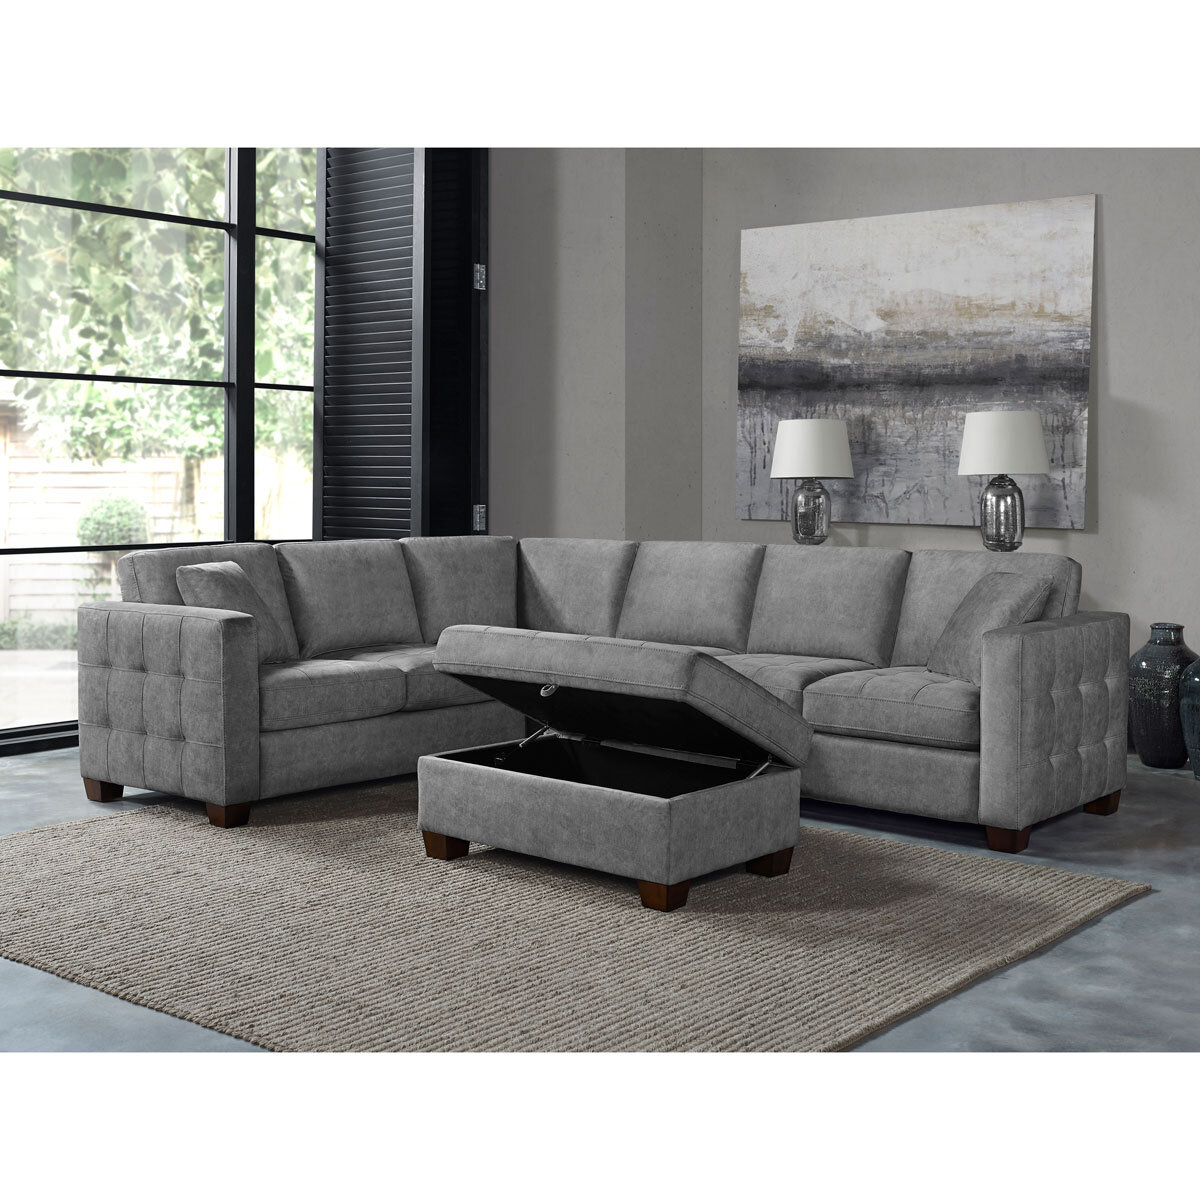 Thomasville Kylie Grey Fabric Corner Sofa with Storage Ottoman